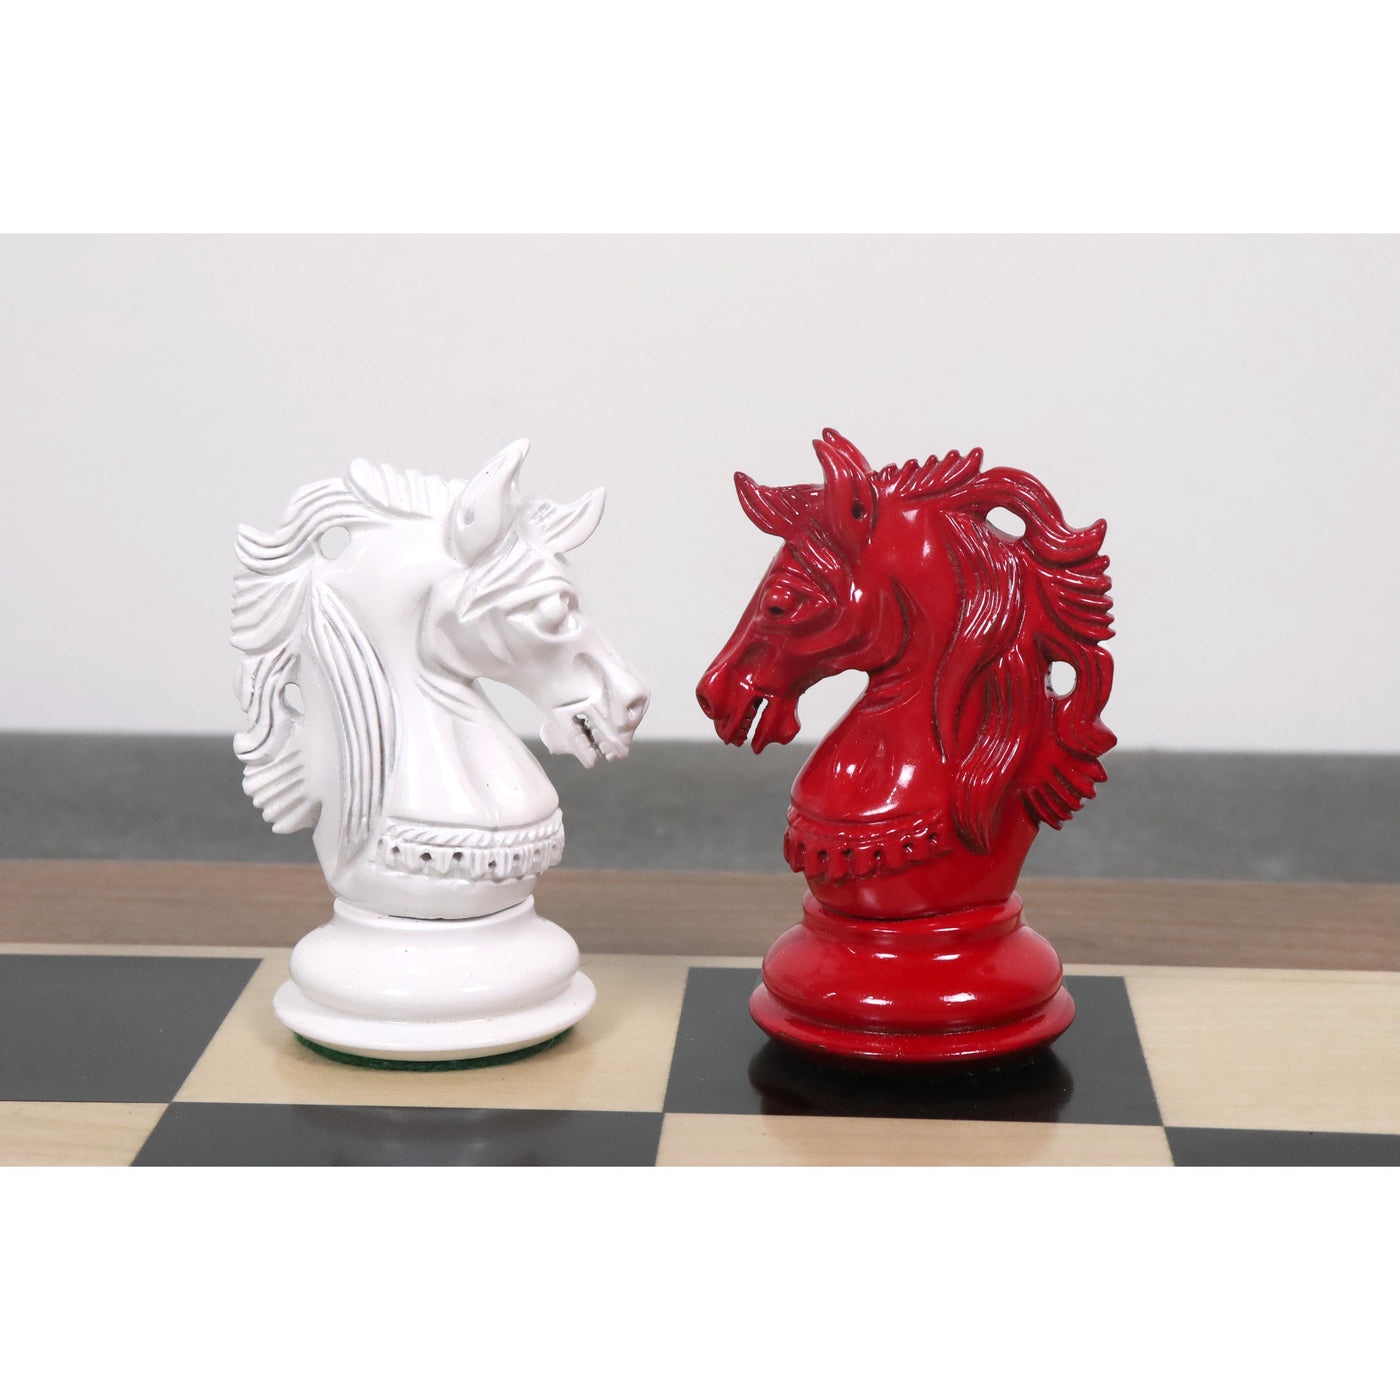 Prestige Luxury Staunton Chess Pieces Only set